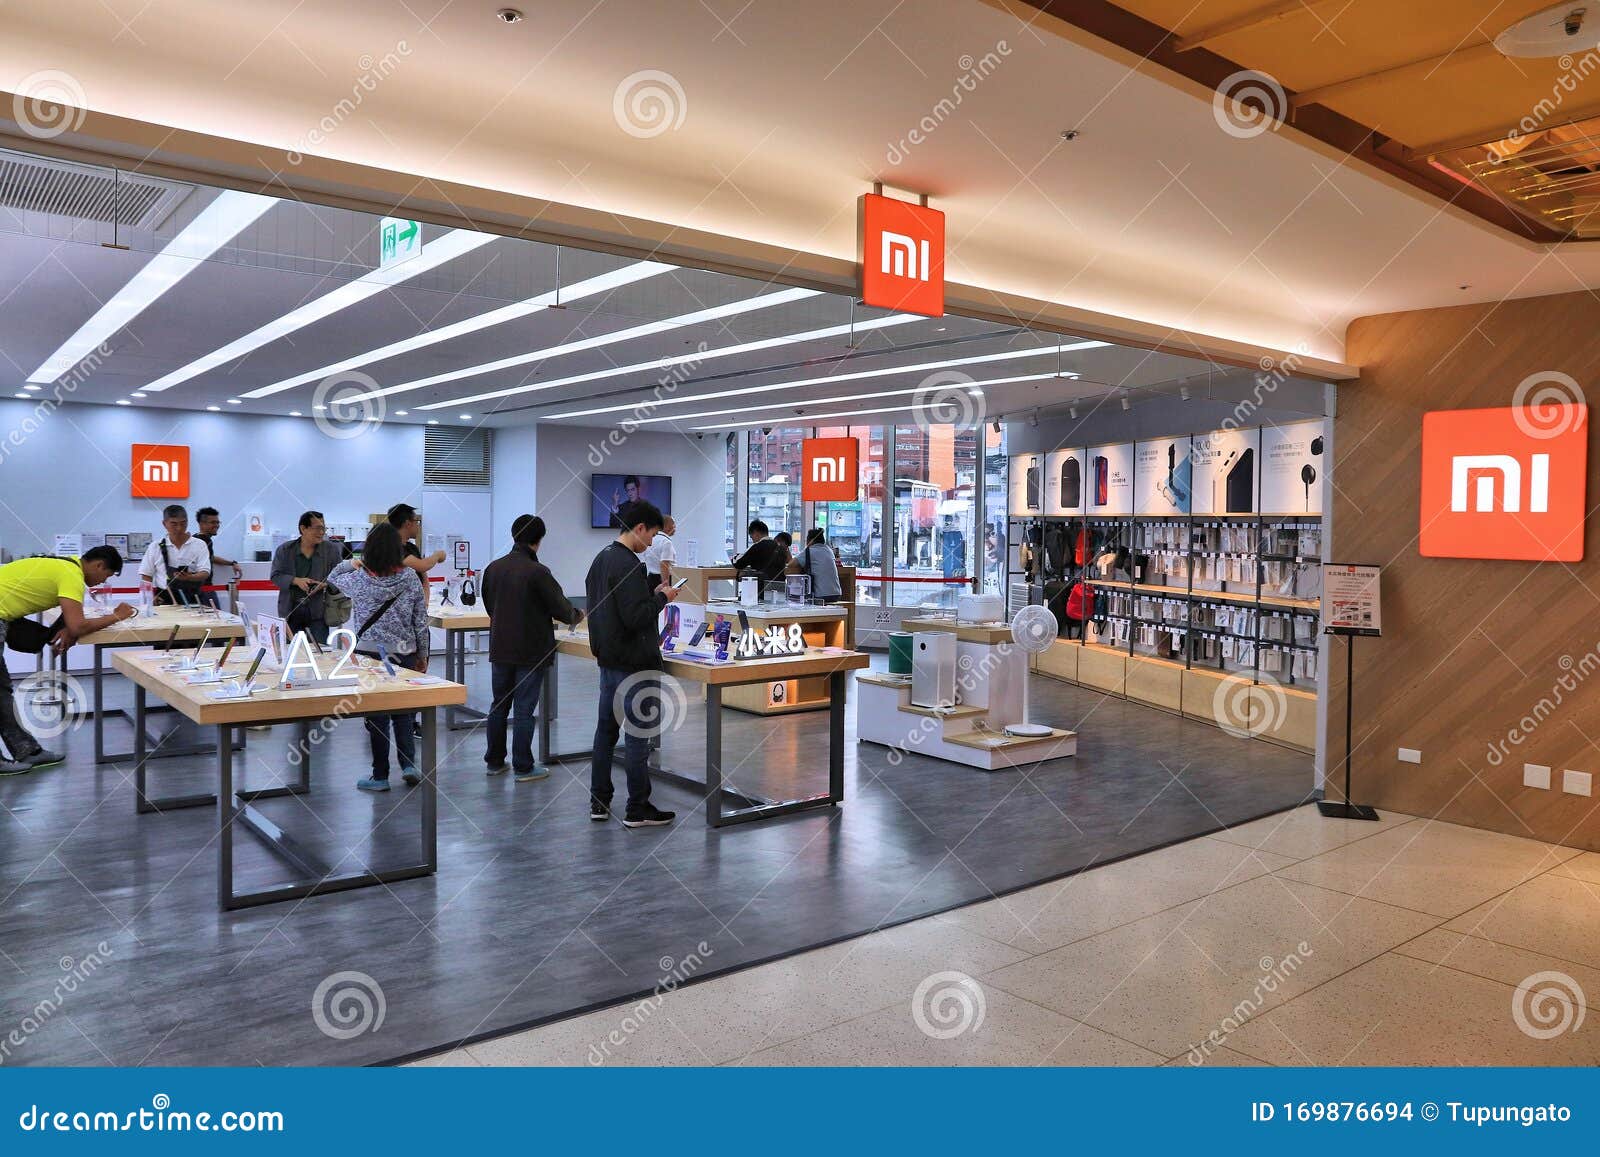 Xiaomi Mi store editorial stock image. Image of tourism - 169876694